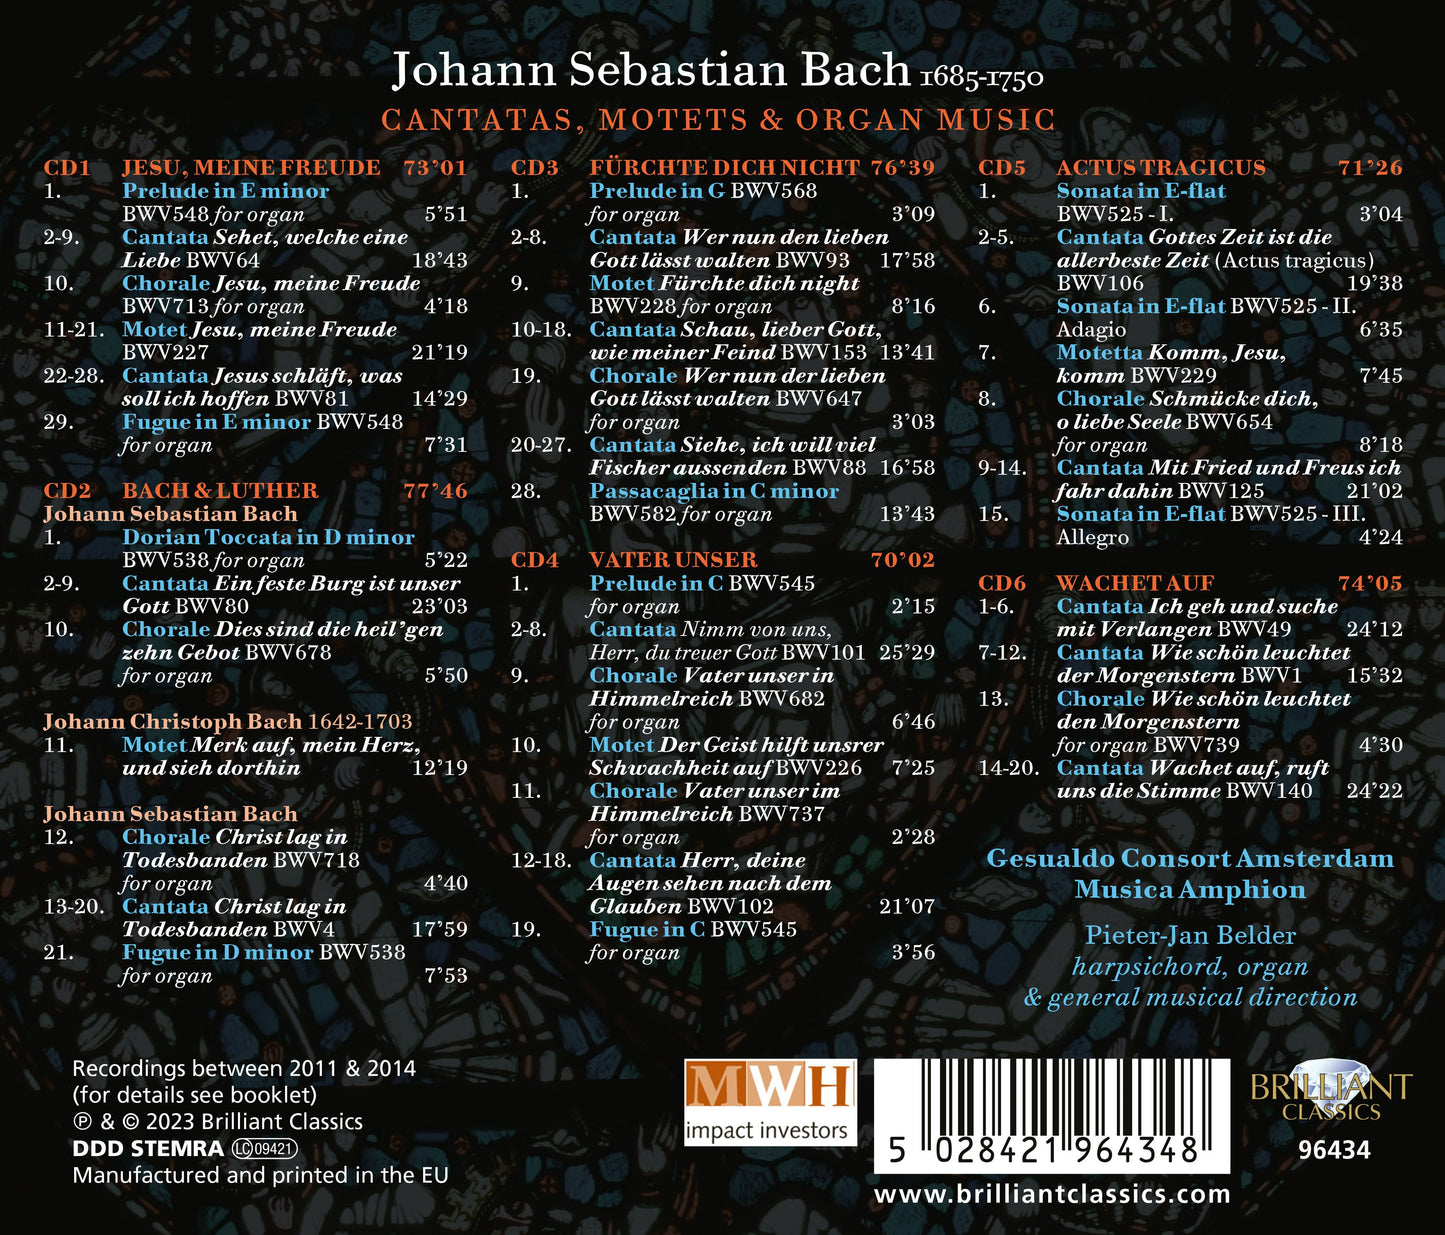 J.S. Bach: Cantatas, Motets & Organ Music